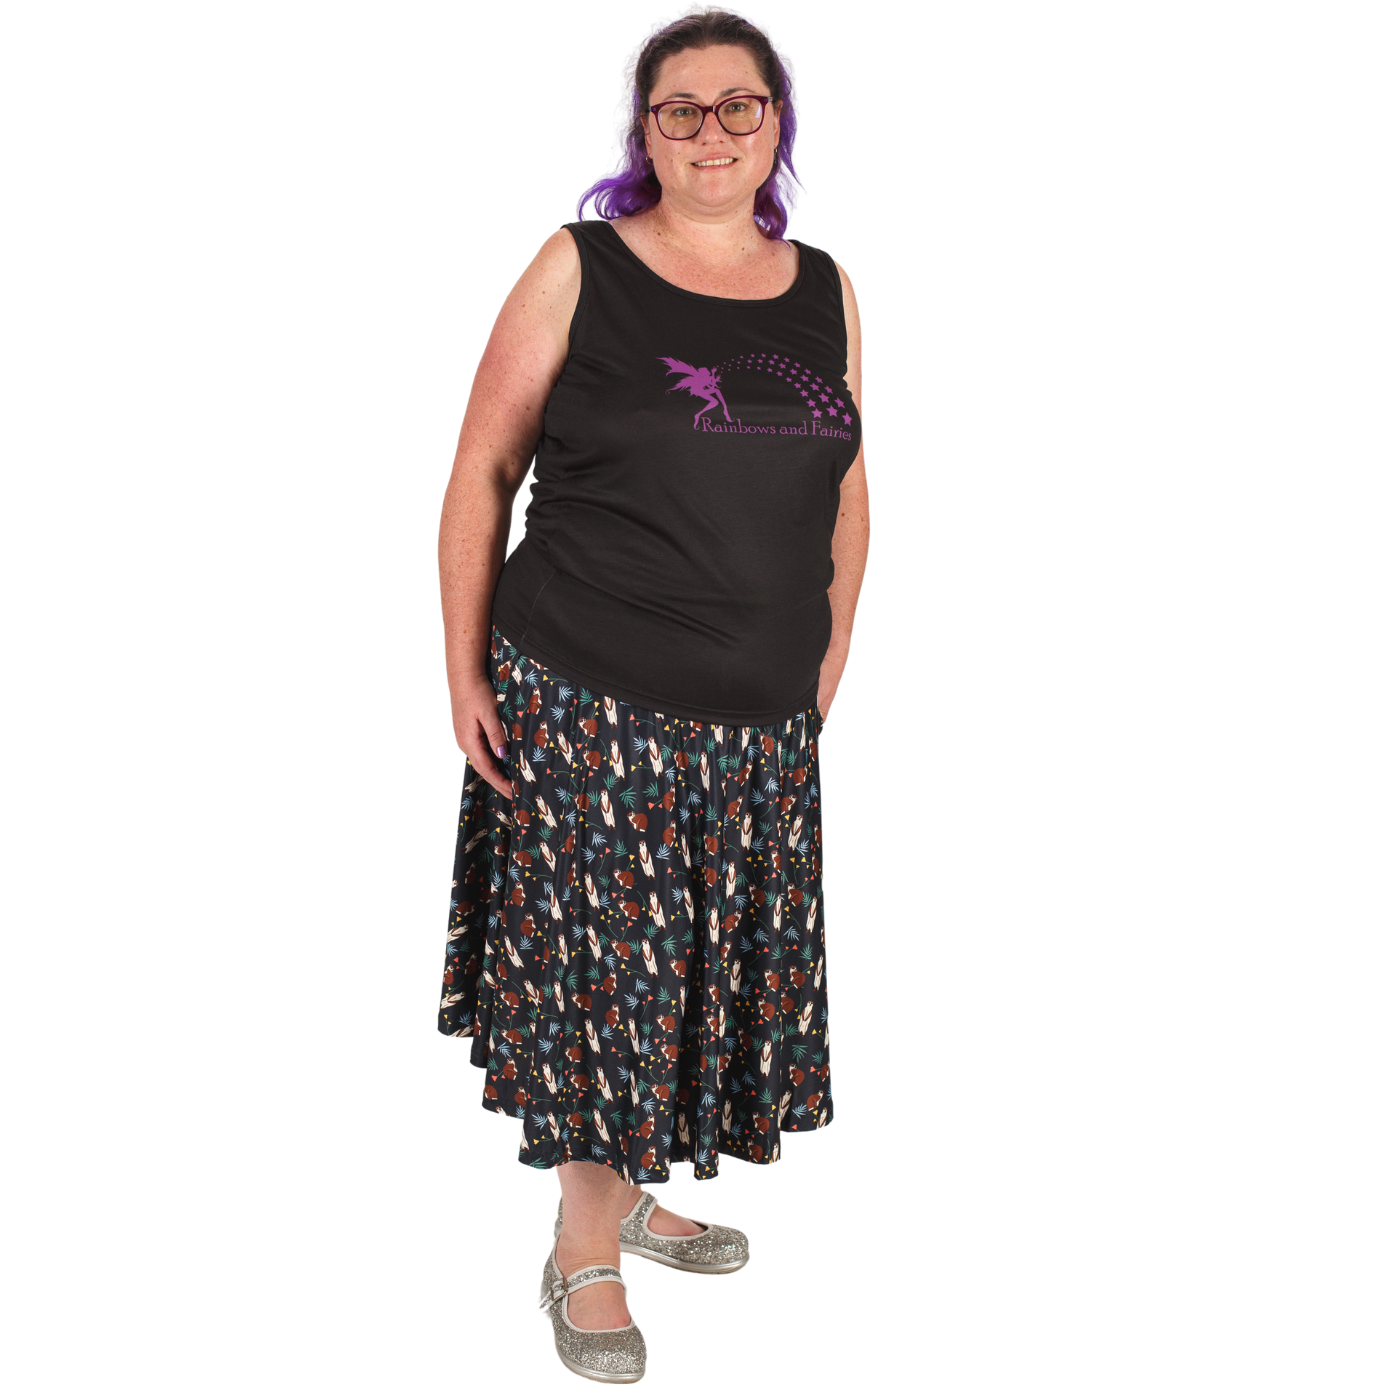 Burrow Swishy Skirt by RainbowsAndFairies.com (Meerkat - Animal Print - Skirt With Pockets - Circle Skirt - Vintage Inspired) - SKU: CL_SWISH_BURRO_ORG - Pic 04